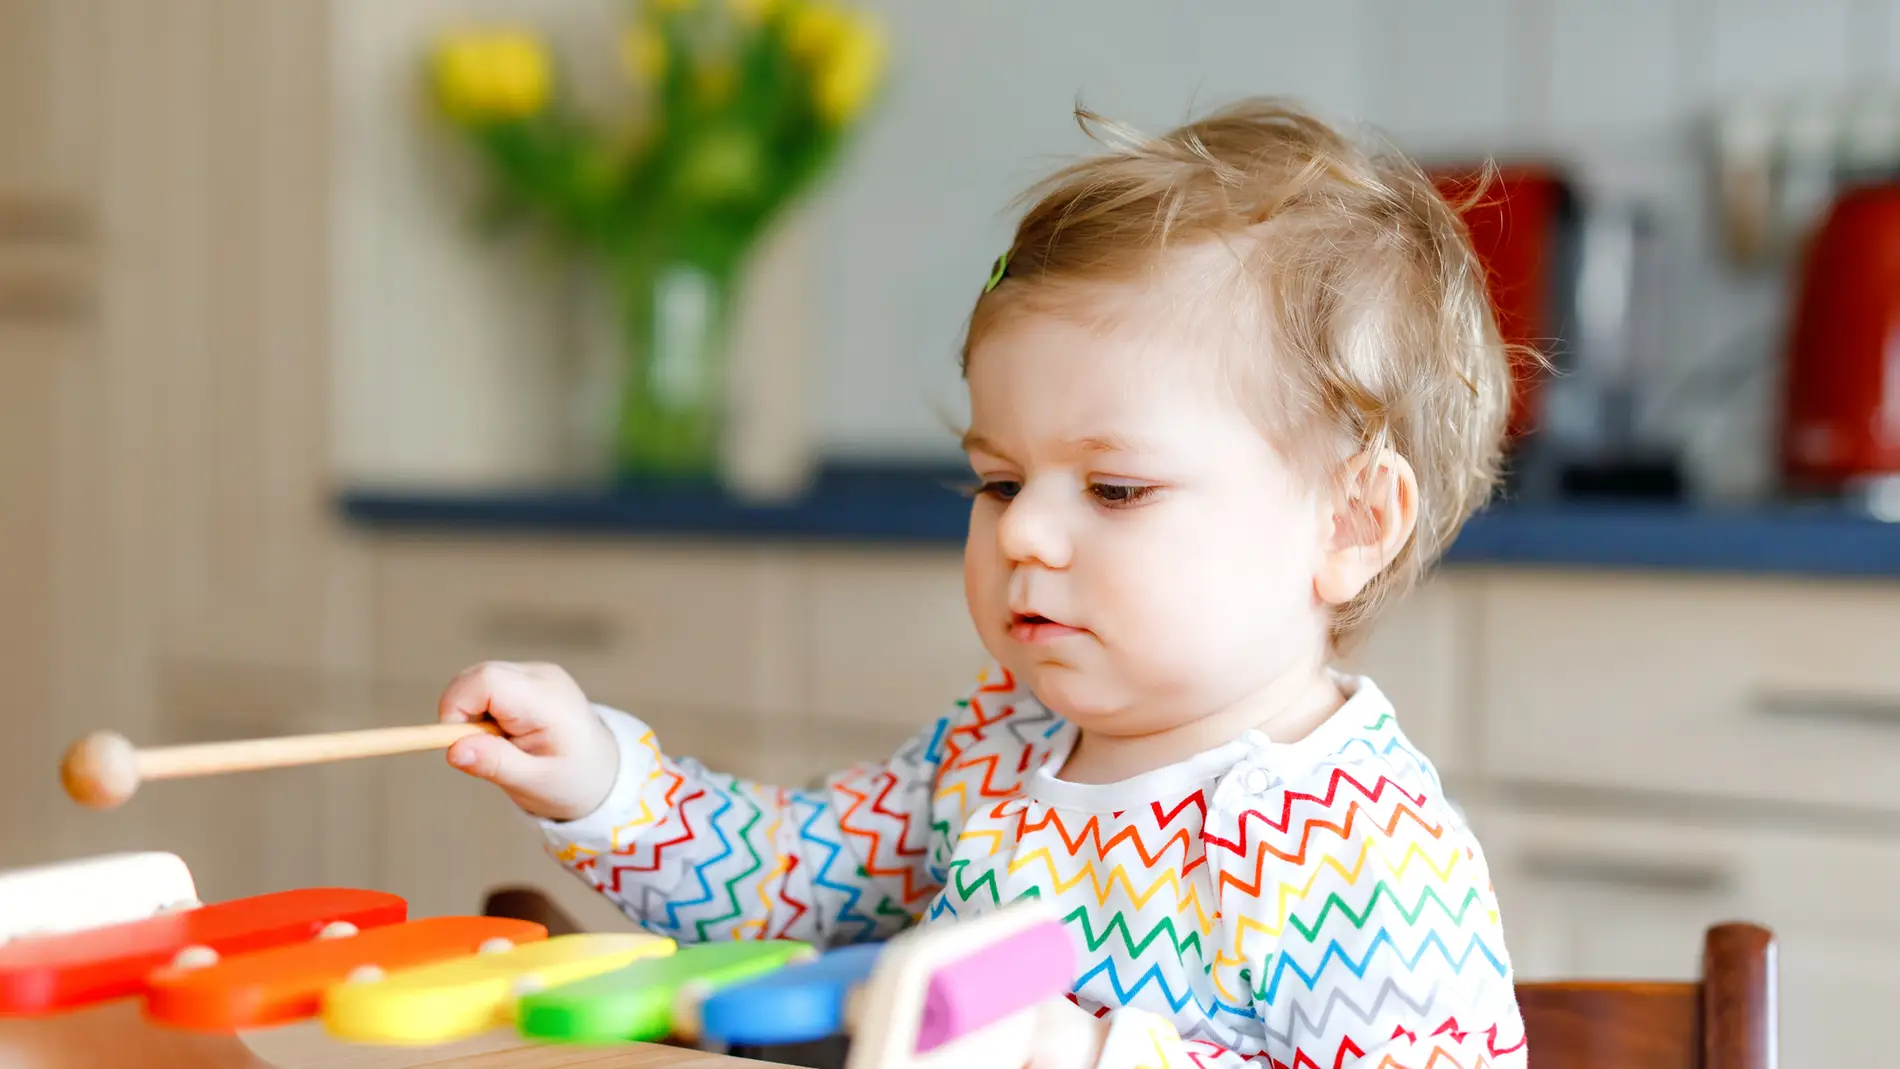 Un niño juega con un xilófono de juguete